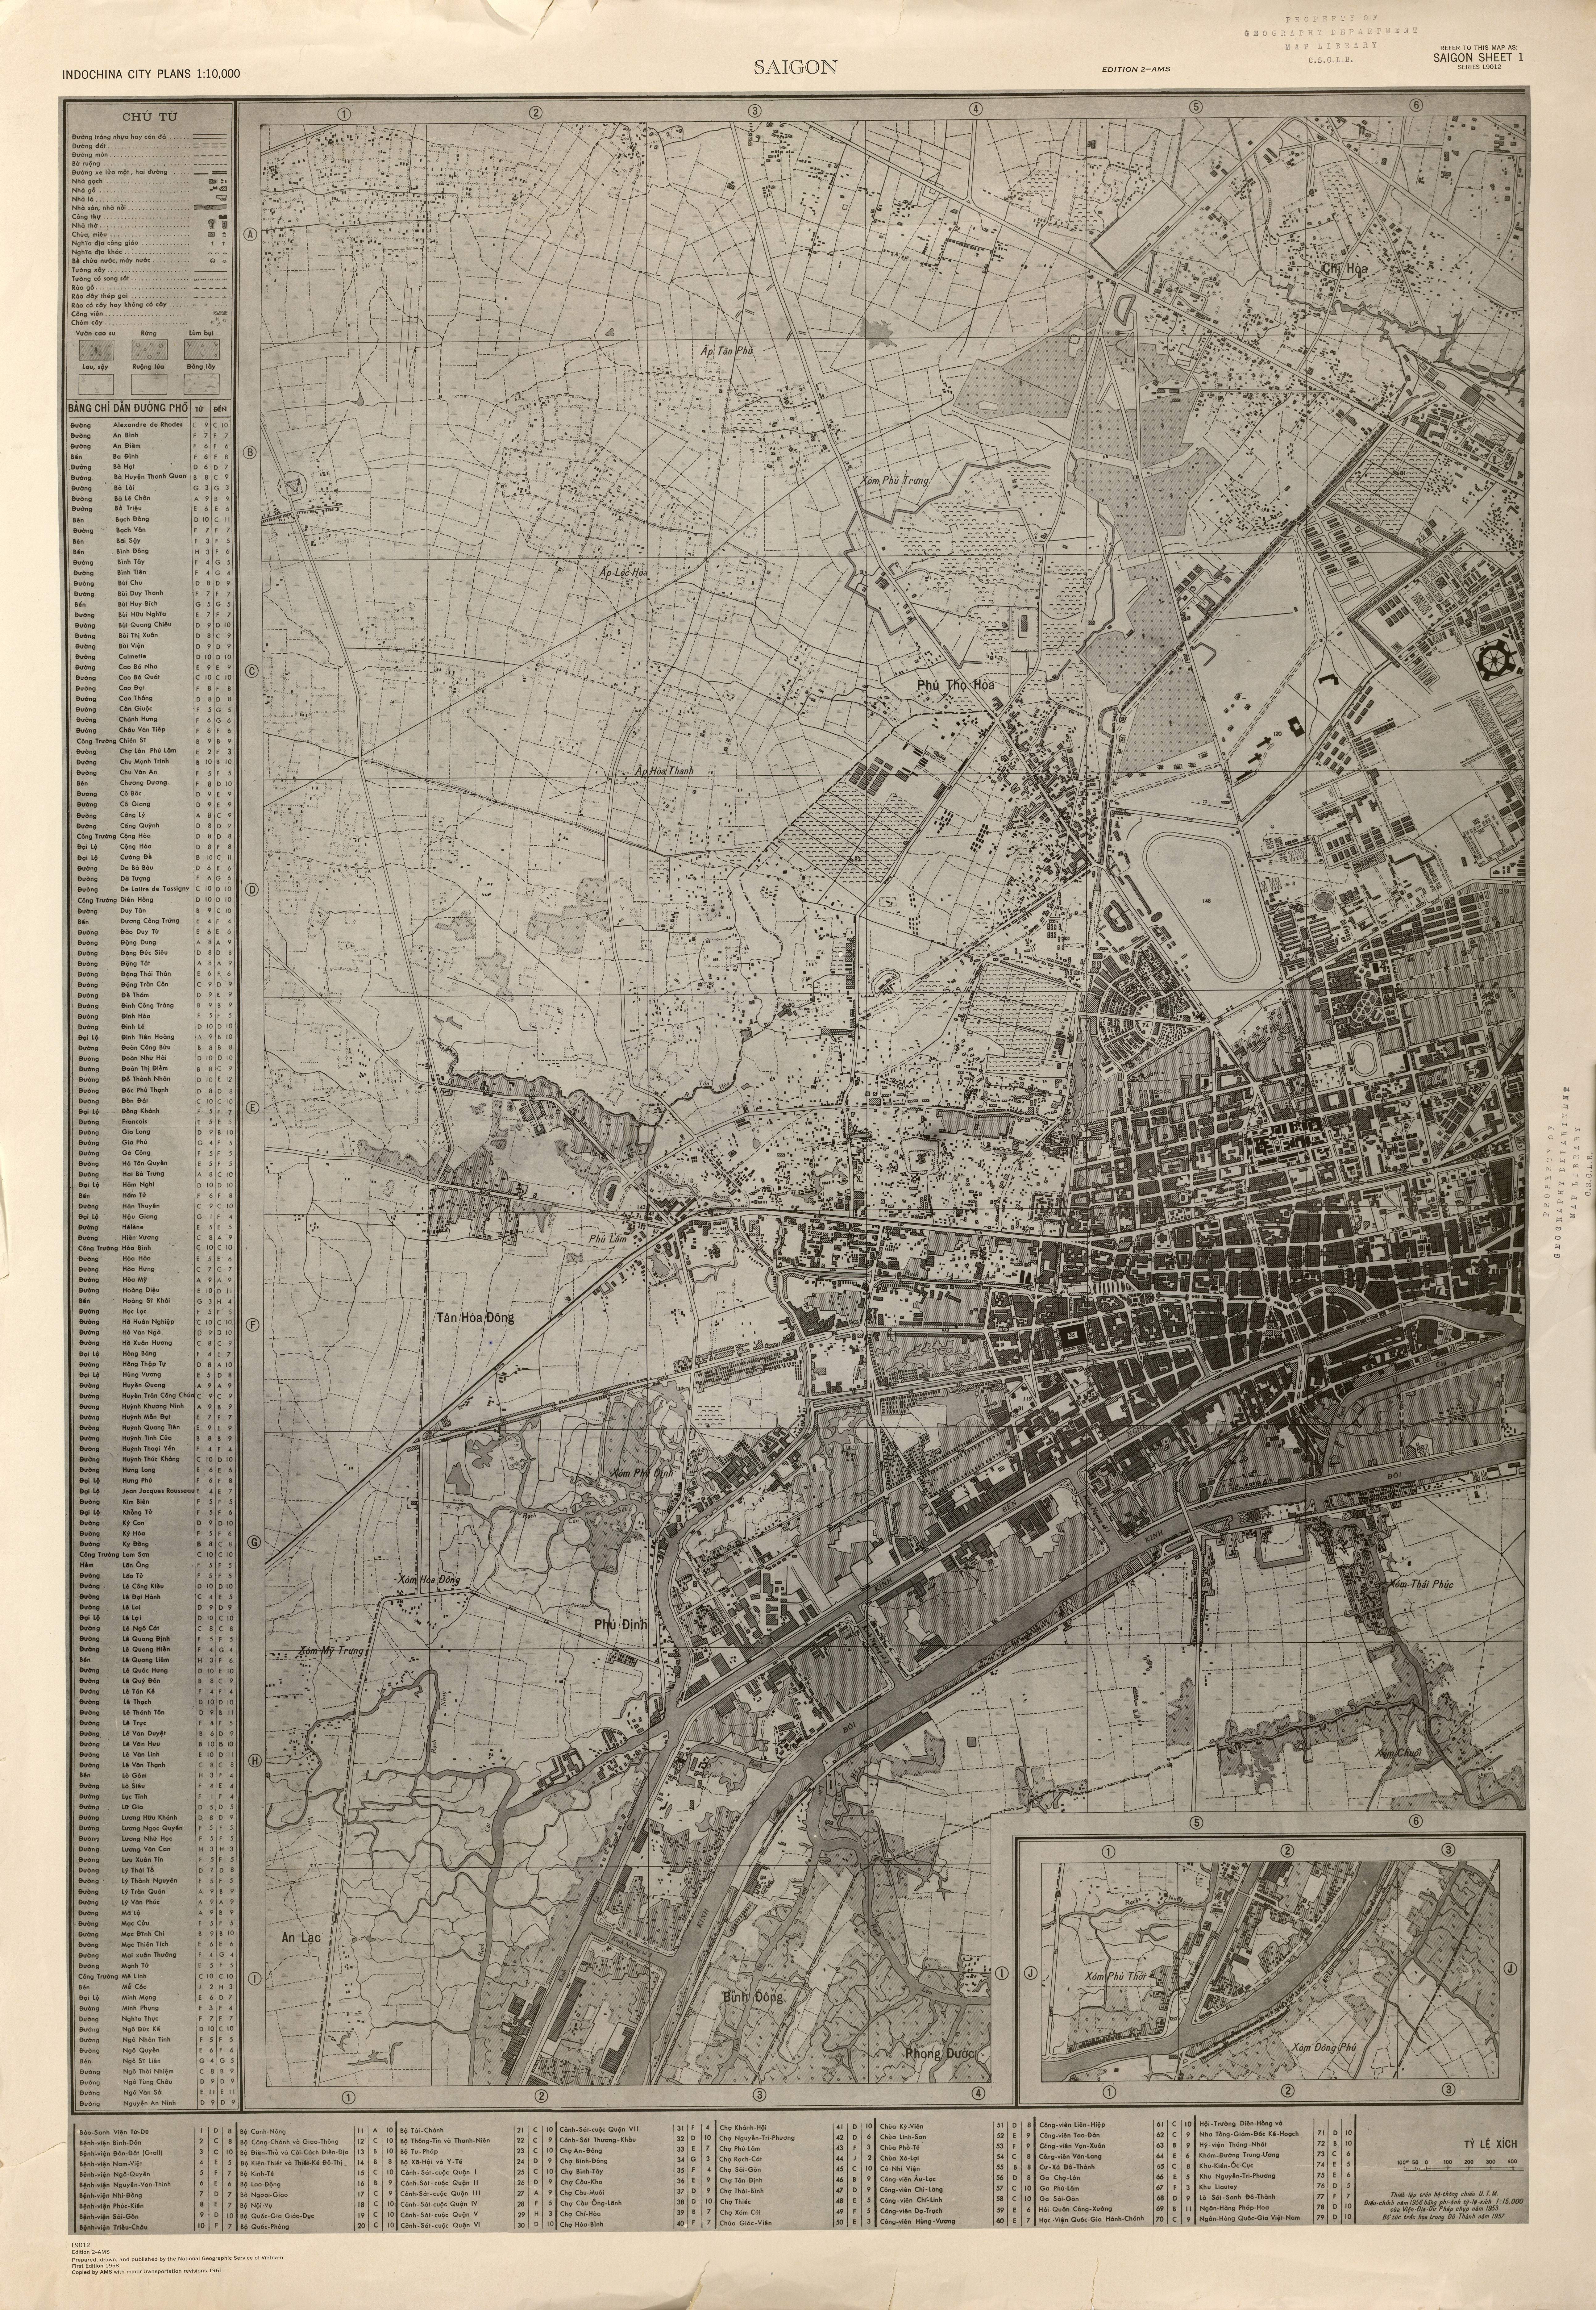 http://www.lib.utexas.edu/maps/world_cities/txu-pclmaps-saigon_sheet1-1961.jpg